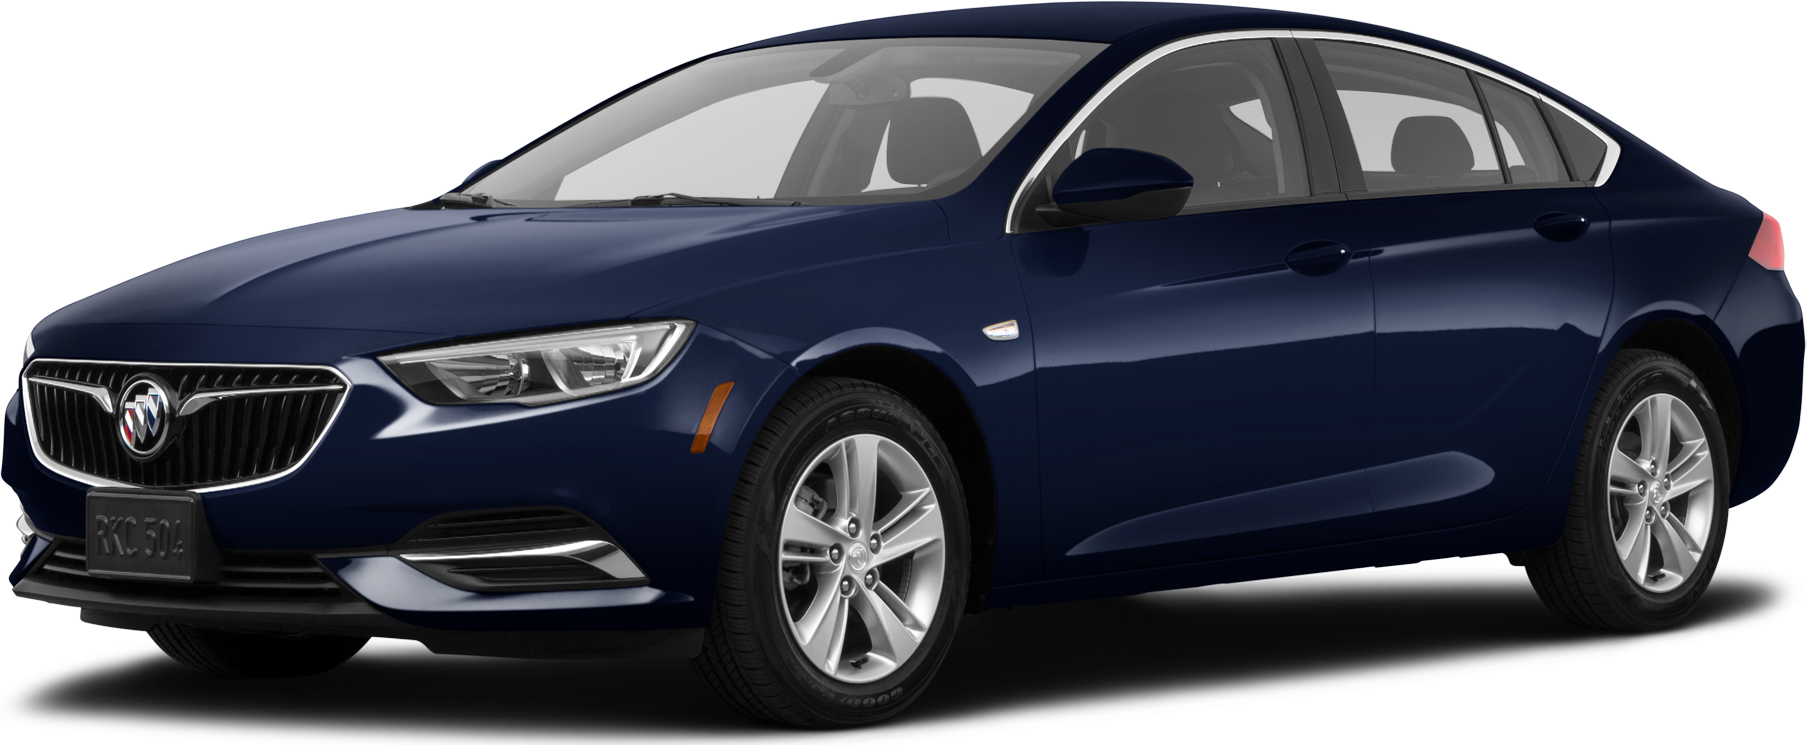 2020 Buick Regal Sportback Price, Value, Ratings & Reviews